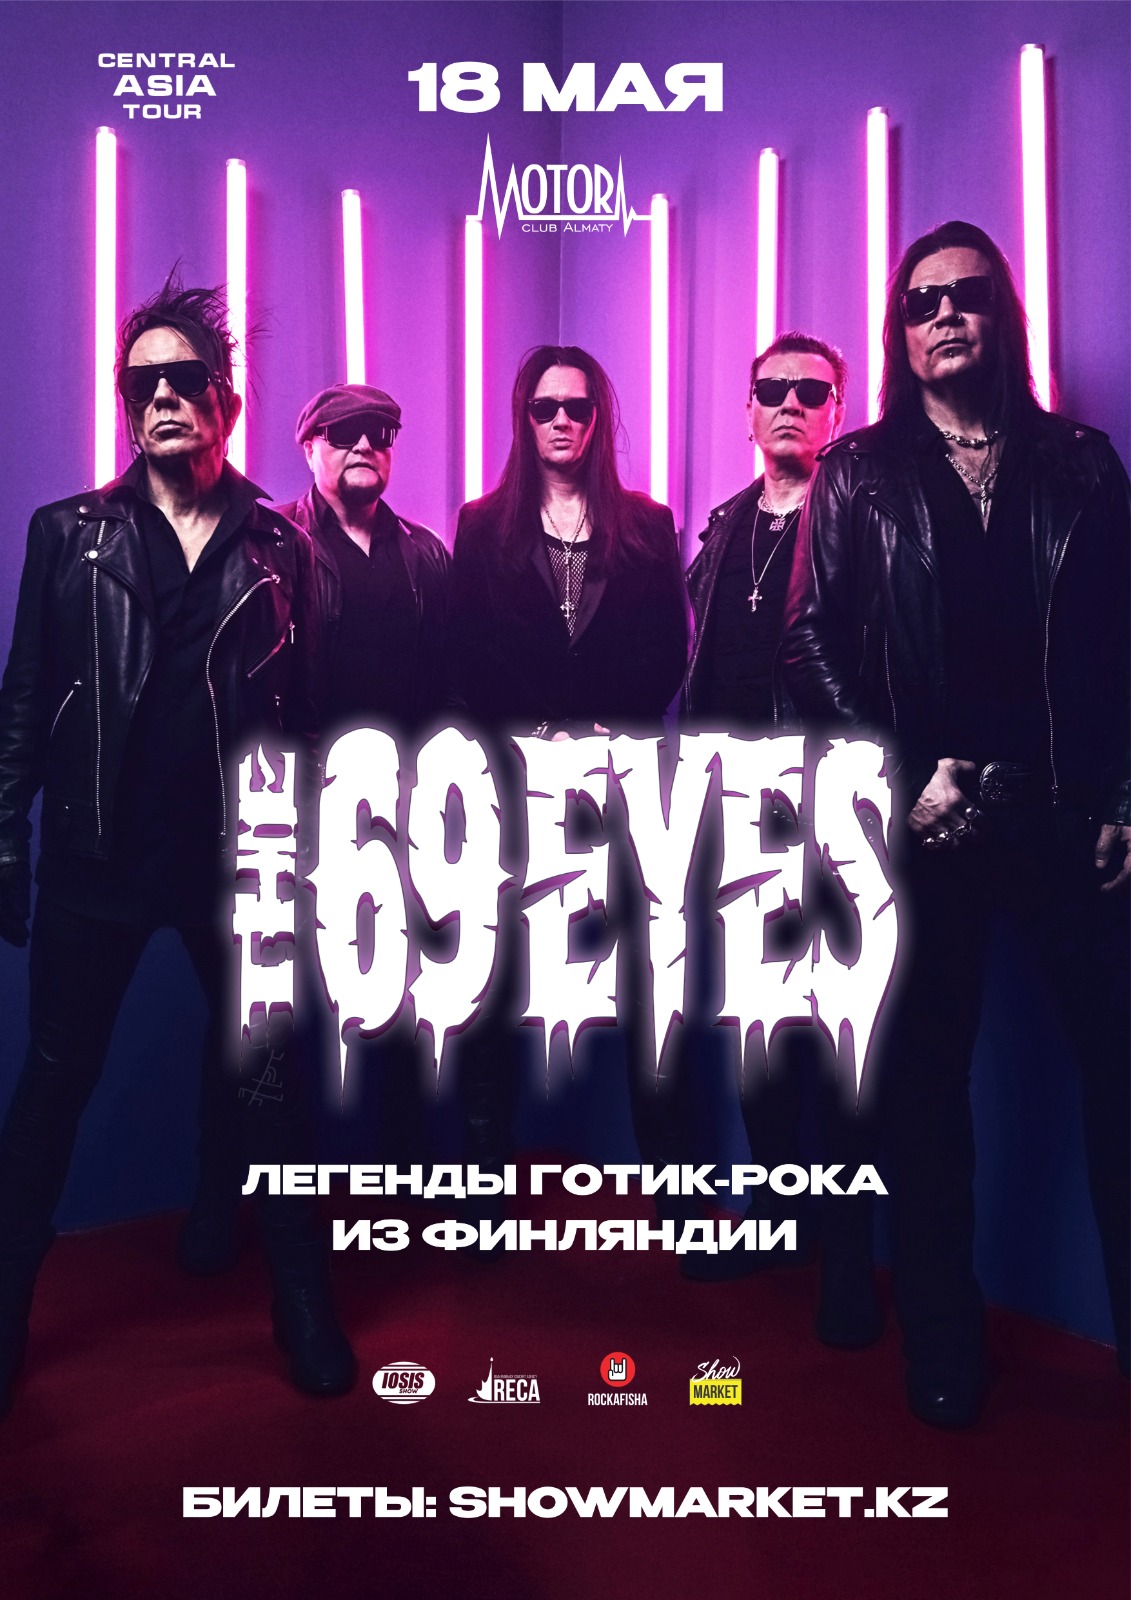 Афиша меропрития: THE 69 EYES в Алматы. Билеты